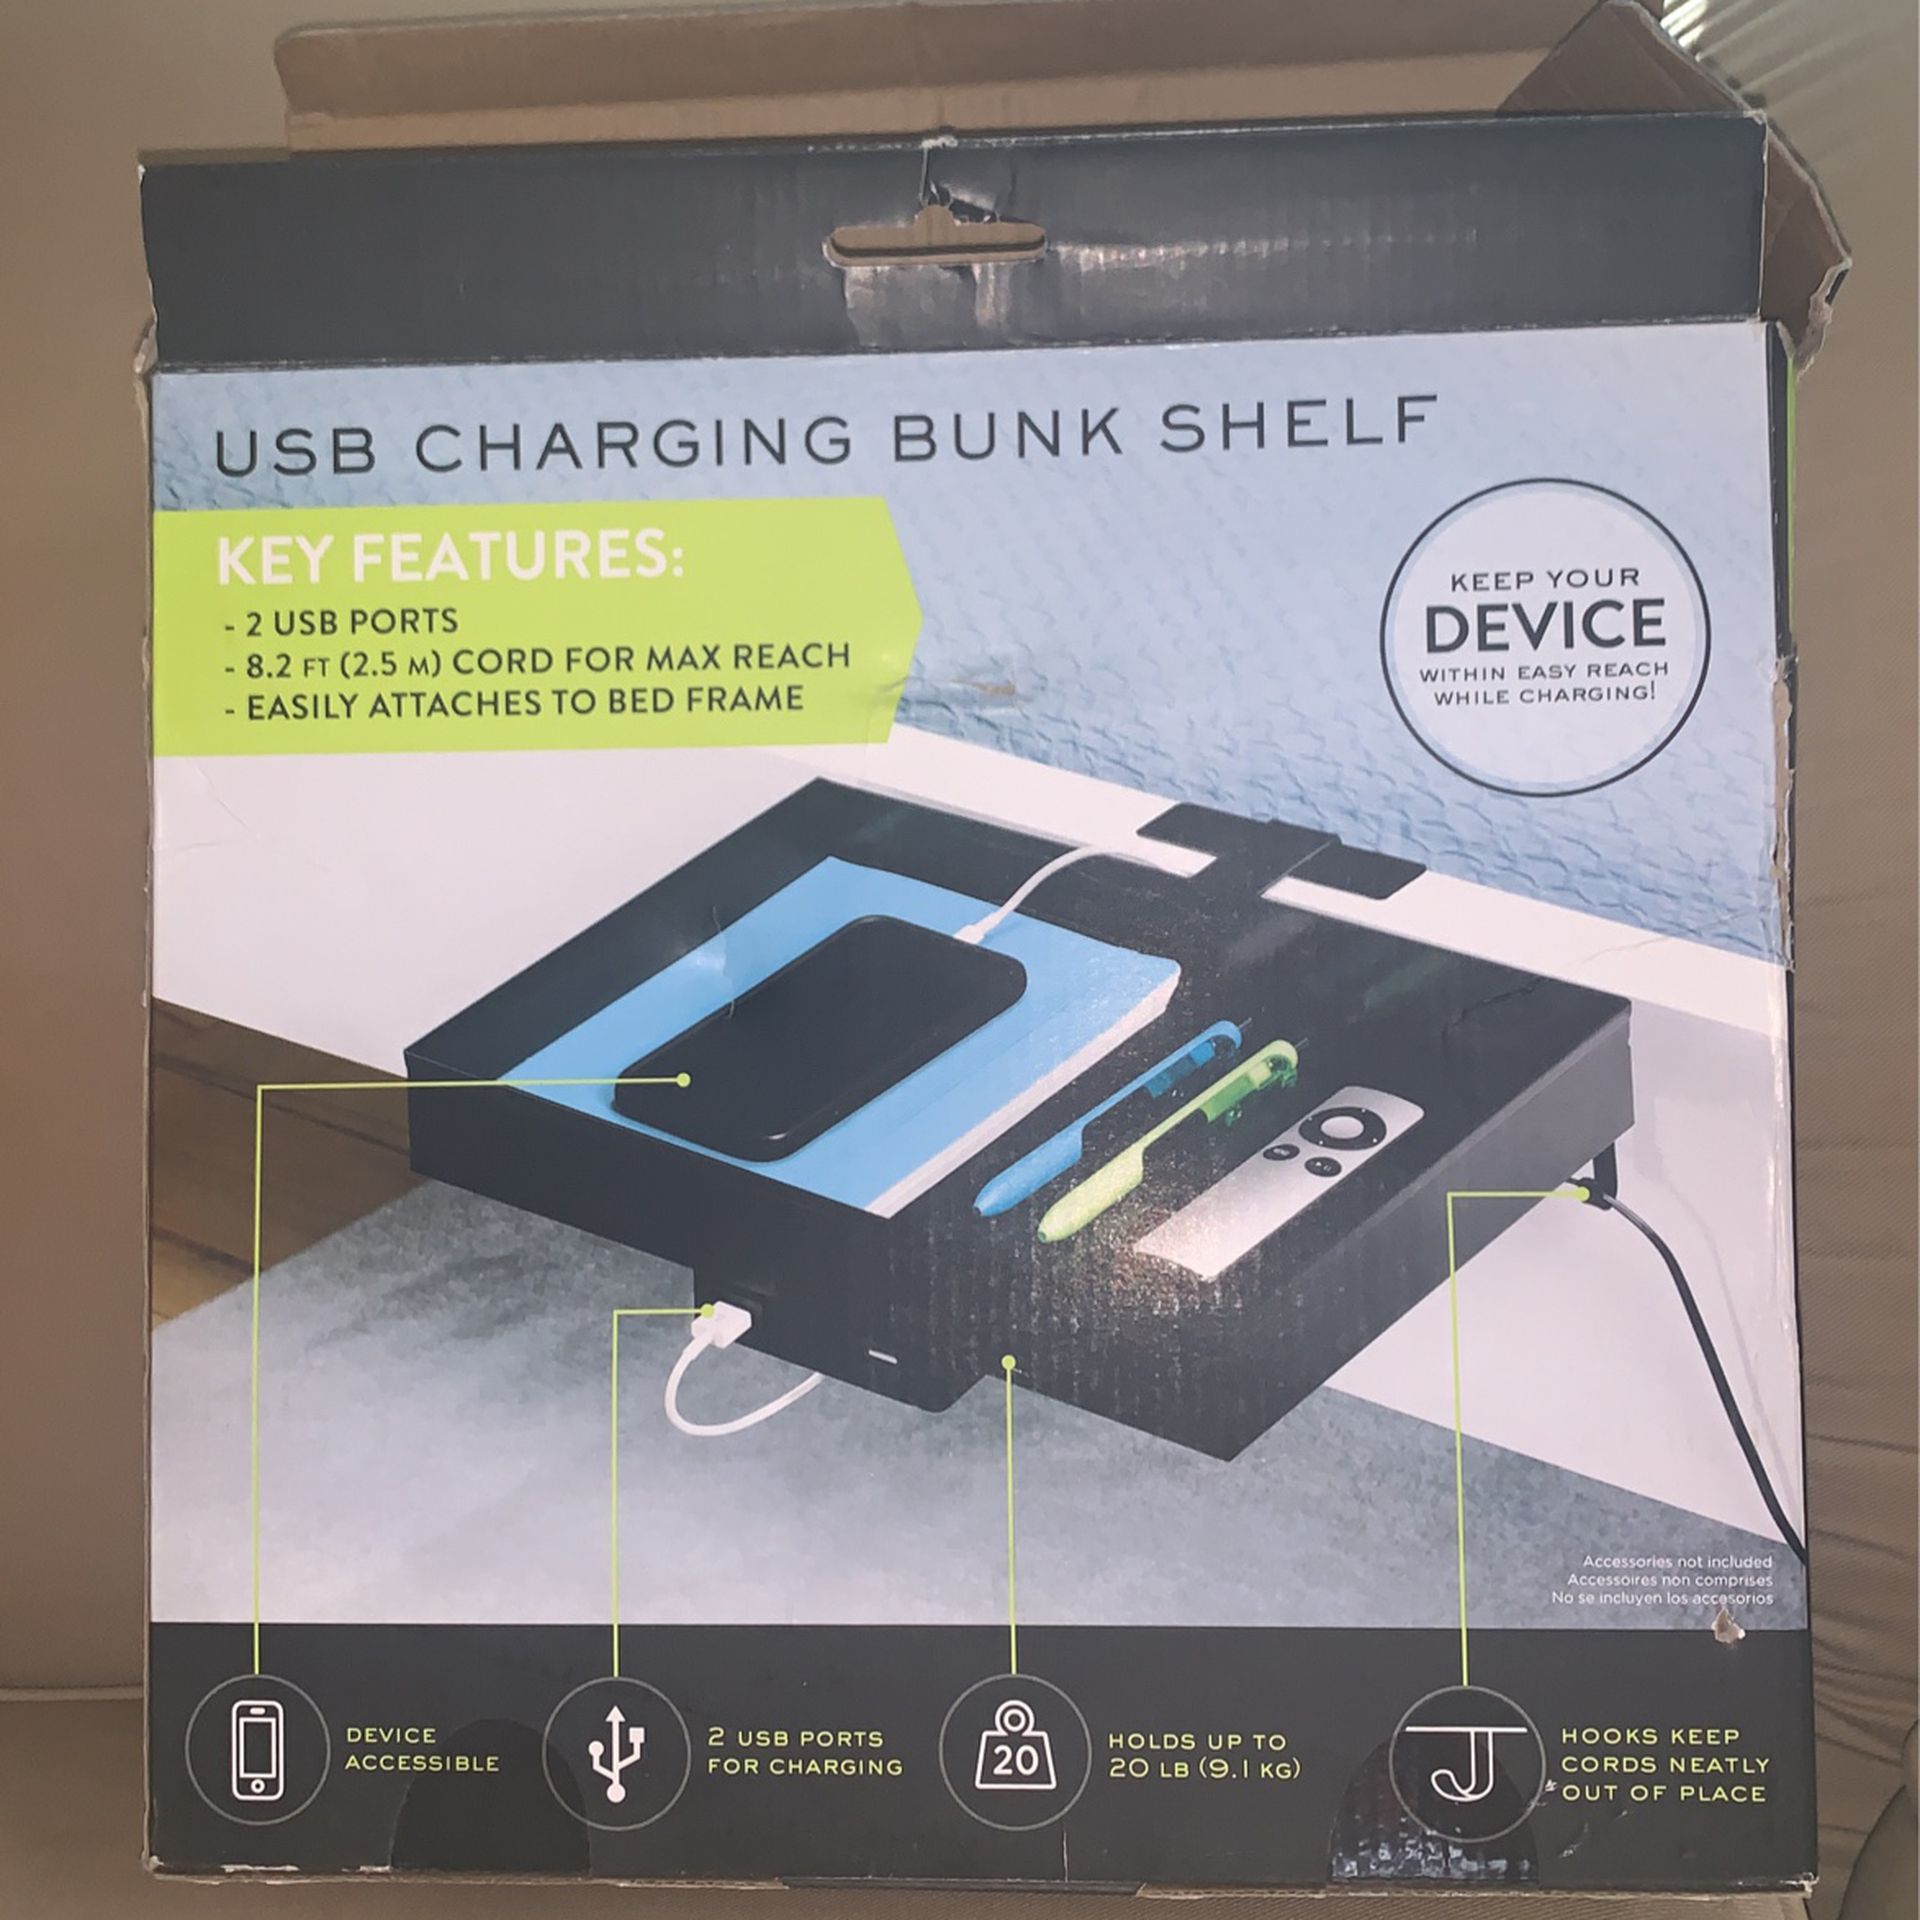 USB Charging Bunk Shelf